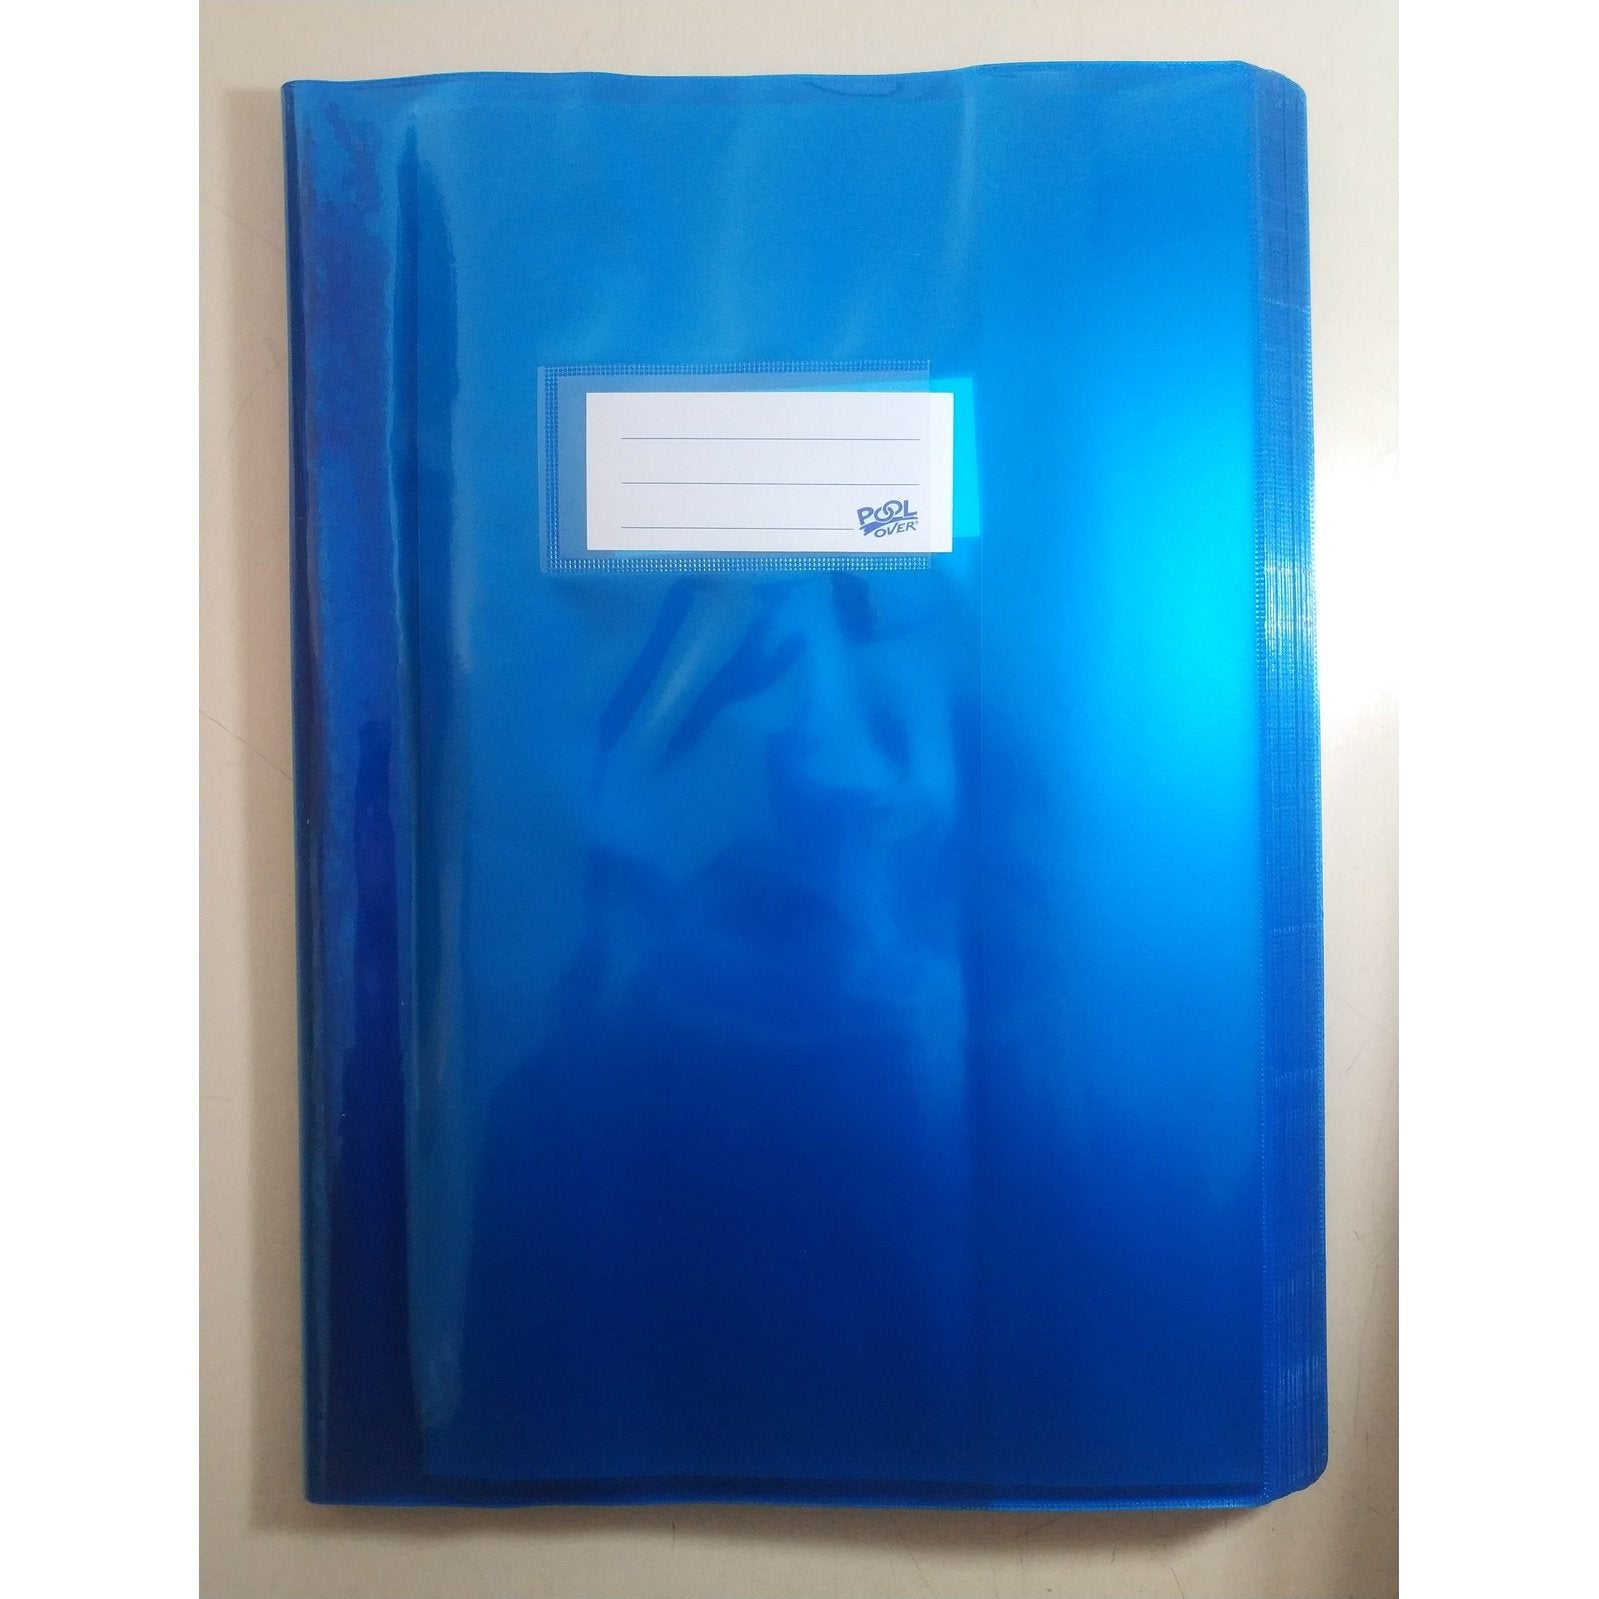 Copertina per quaderni - polipropilene - trasparente - 30x21 cm - extra  spessore - etichetta portanome - neutro